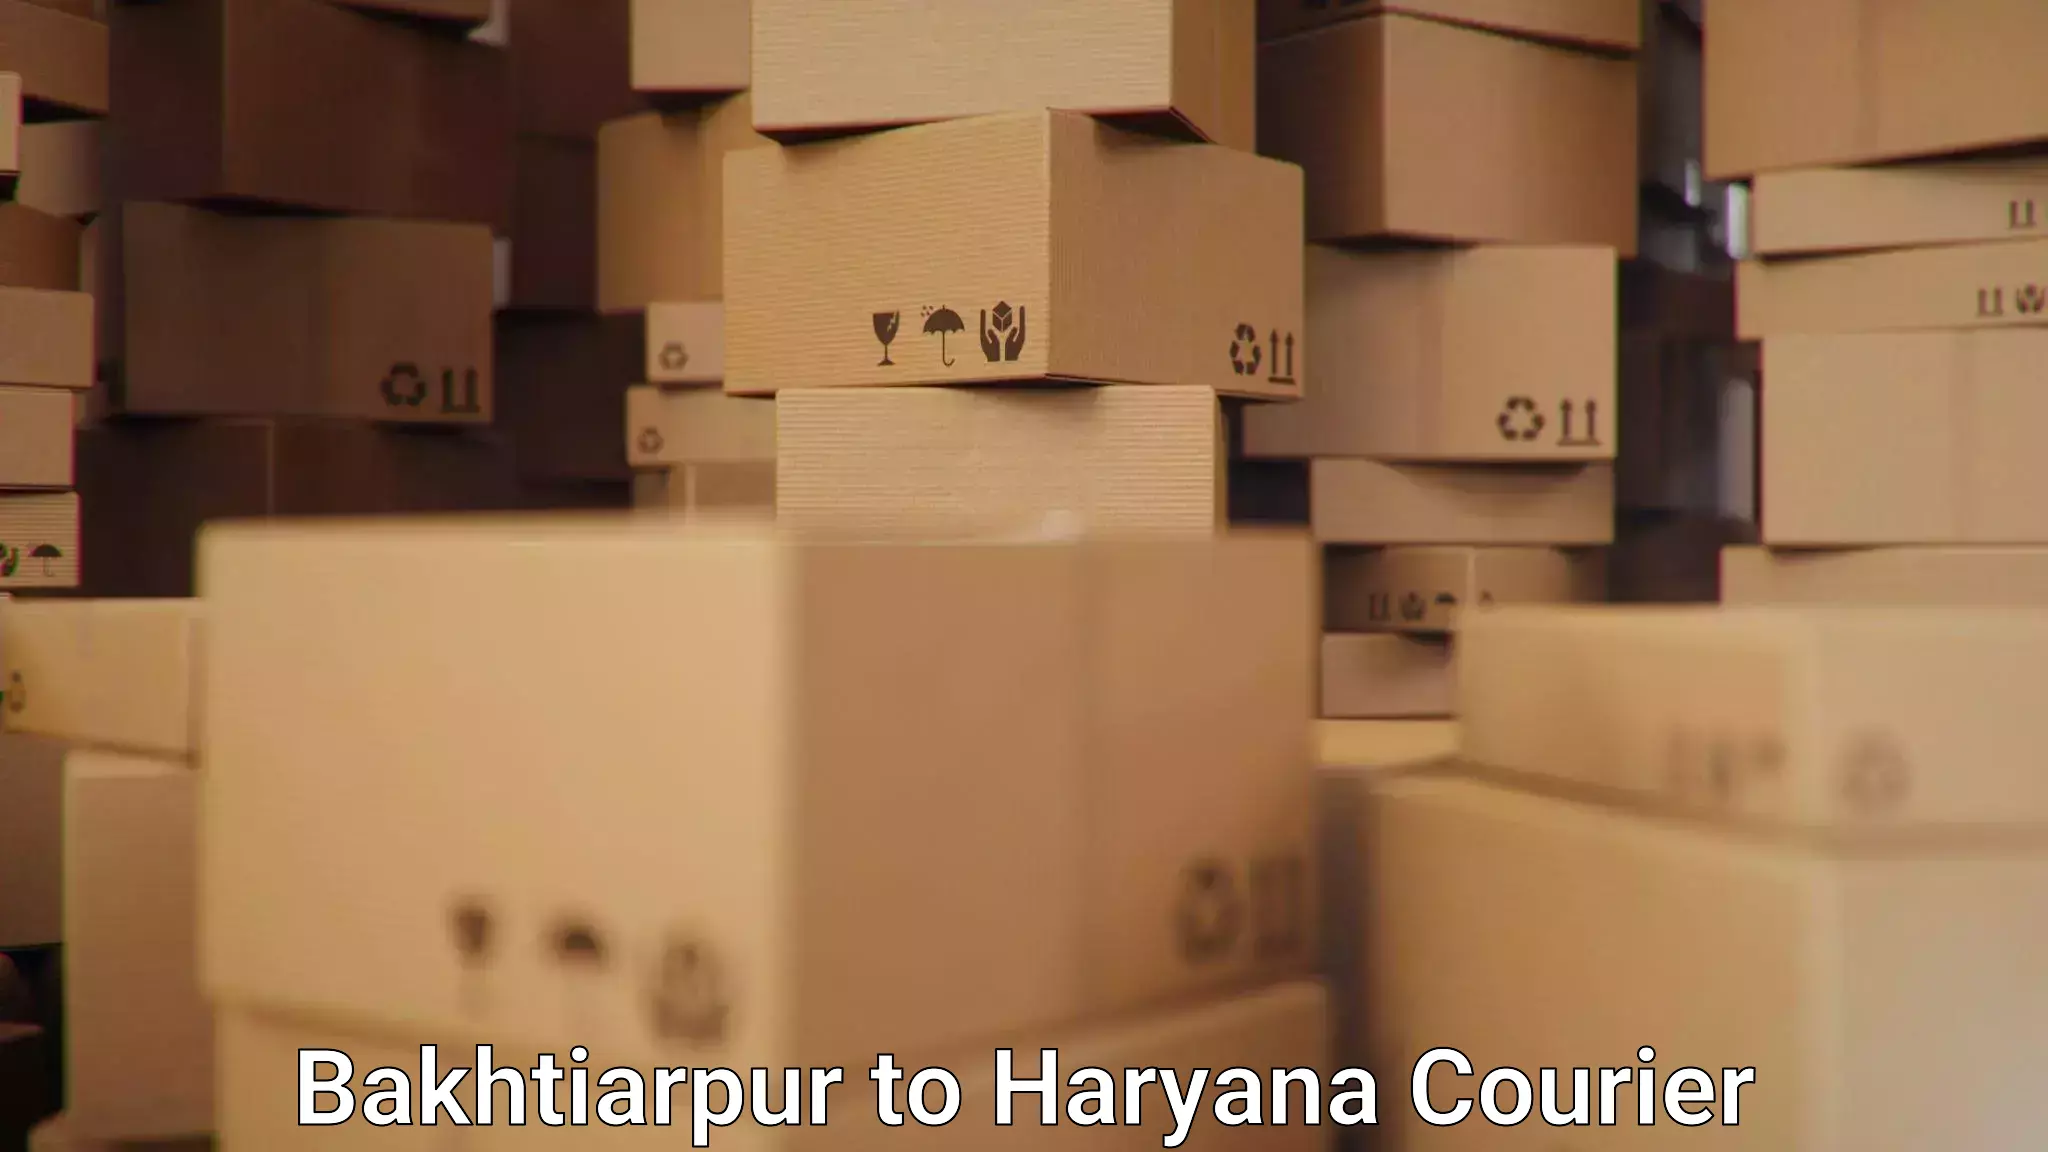 Global shipping networks Bakhtiarpur to Haryana